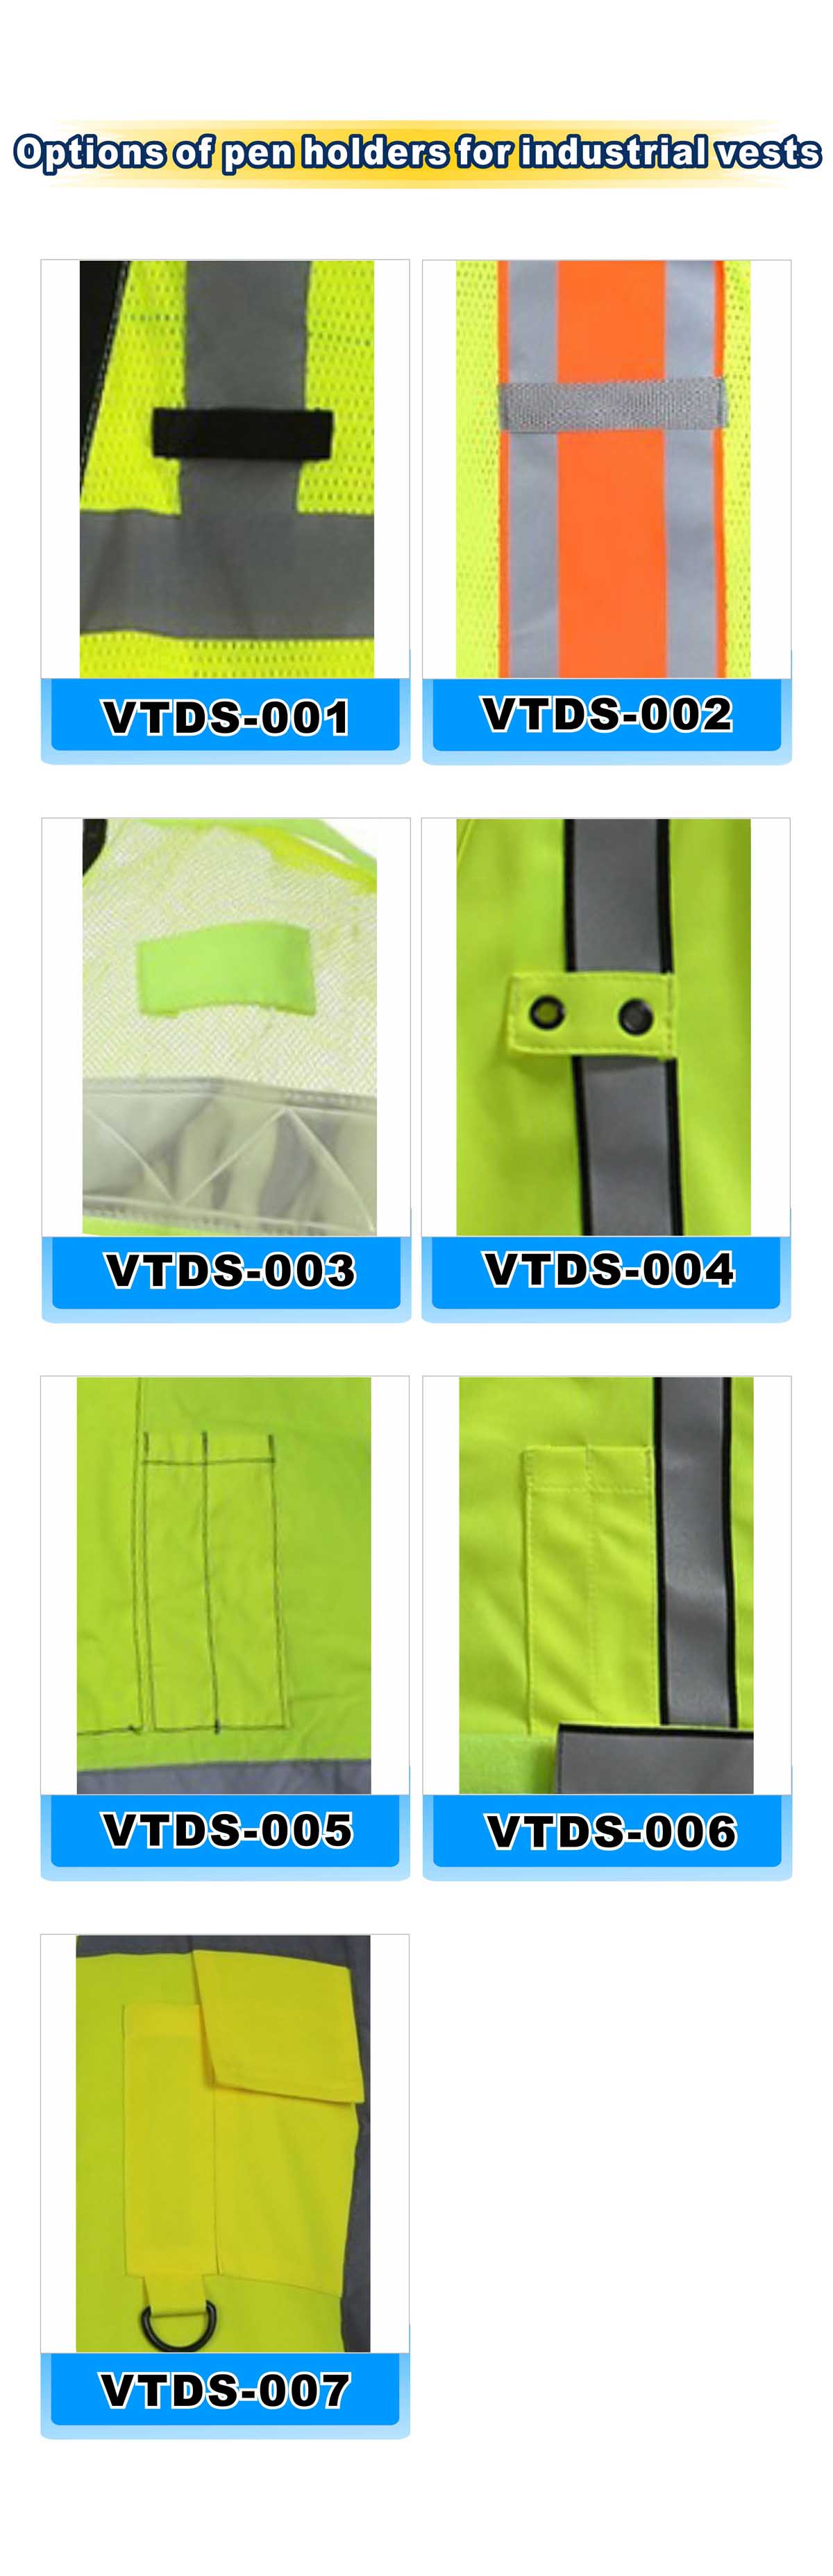 Option of pen holders for industrial vests